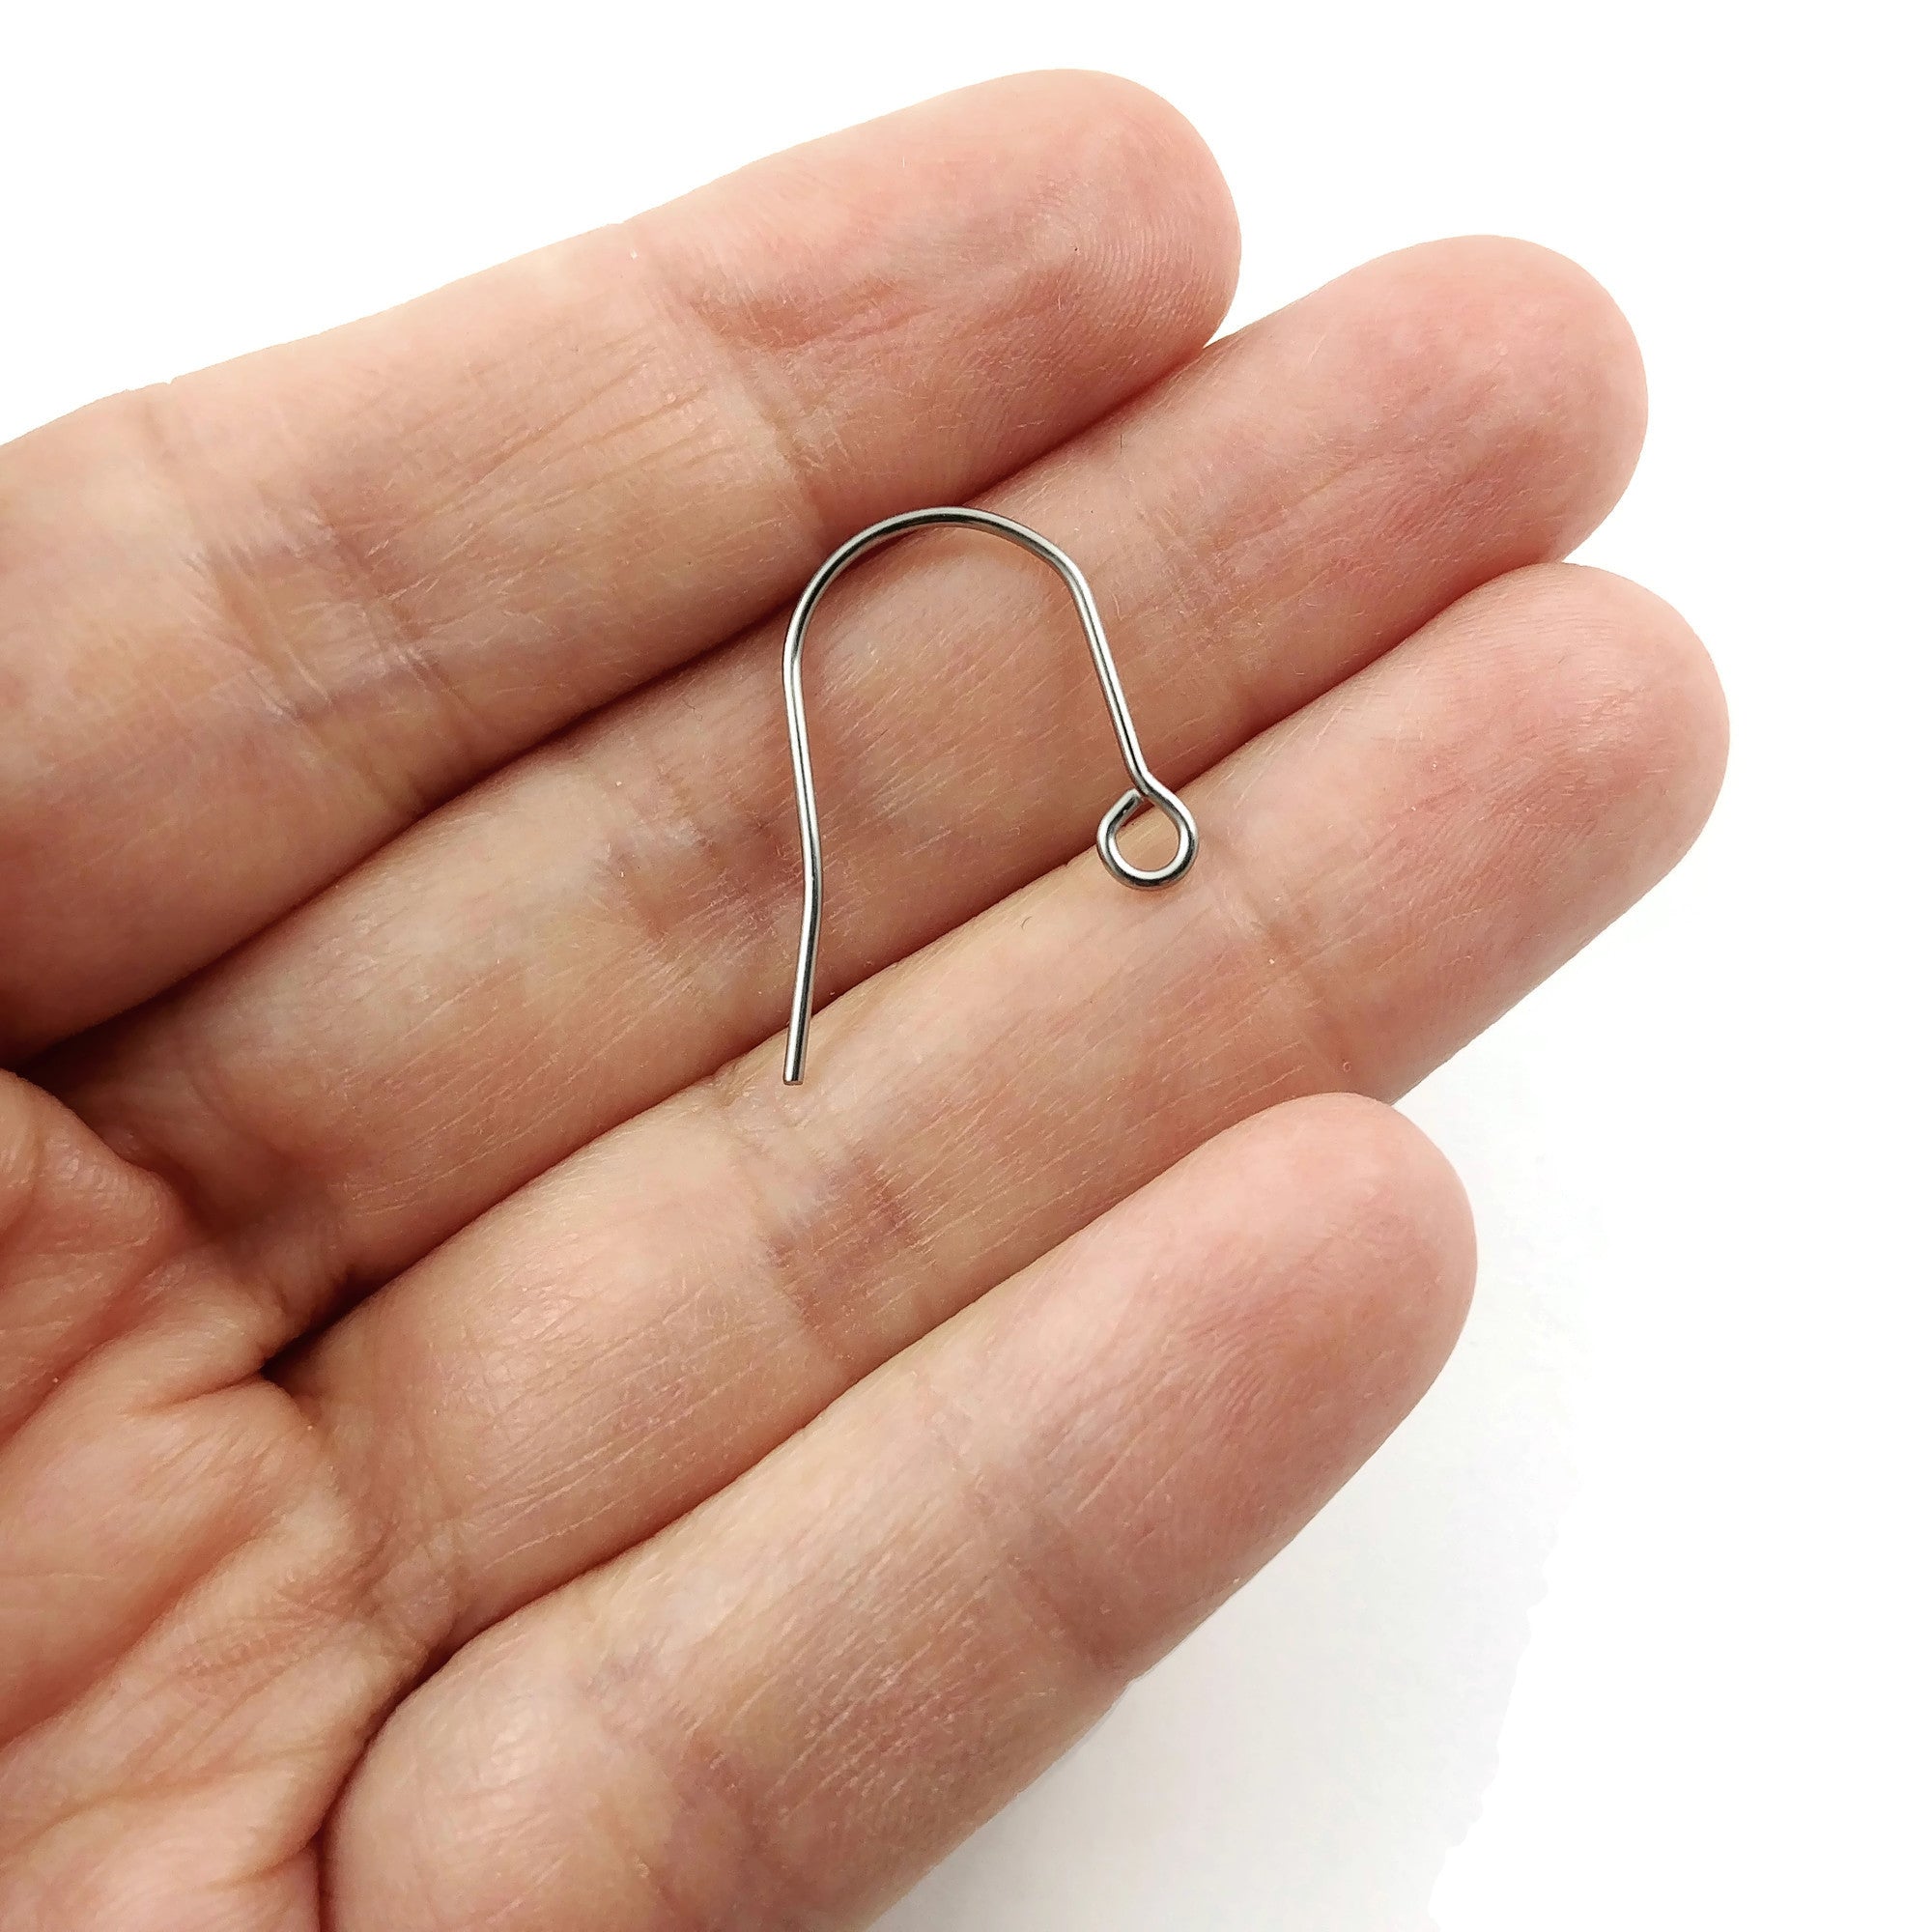 Nickel free stainless steel minimalist earring hooks 50 pcs (25 pairs) Hypoallergenic